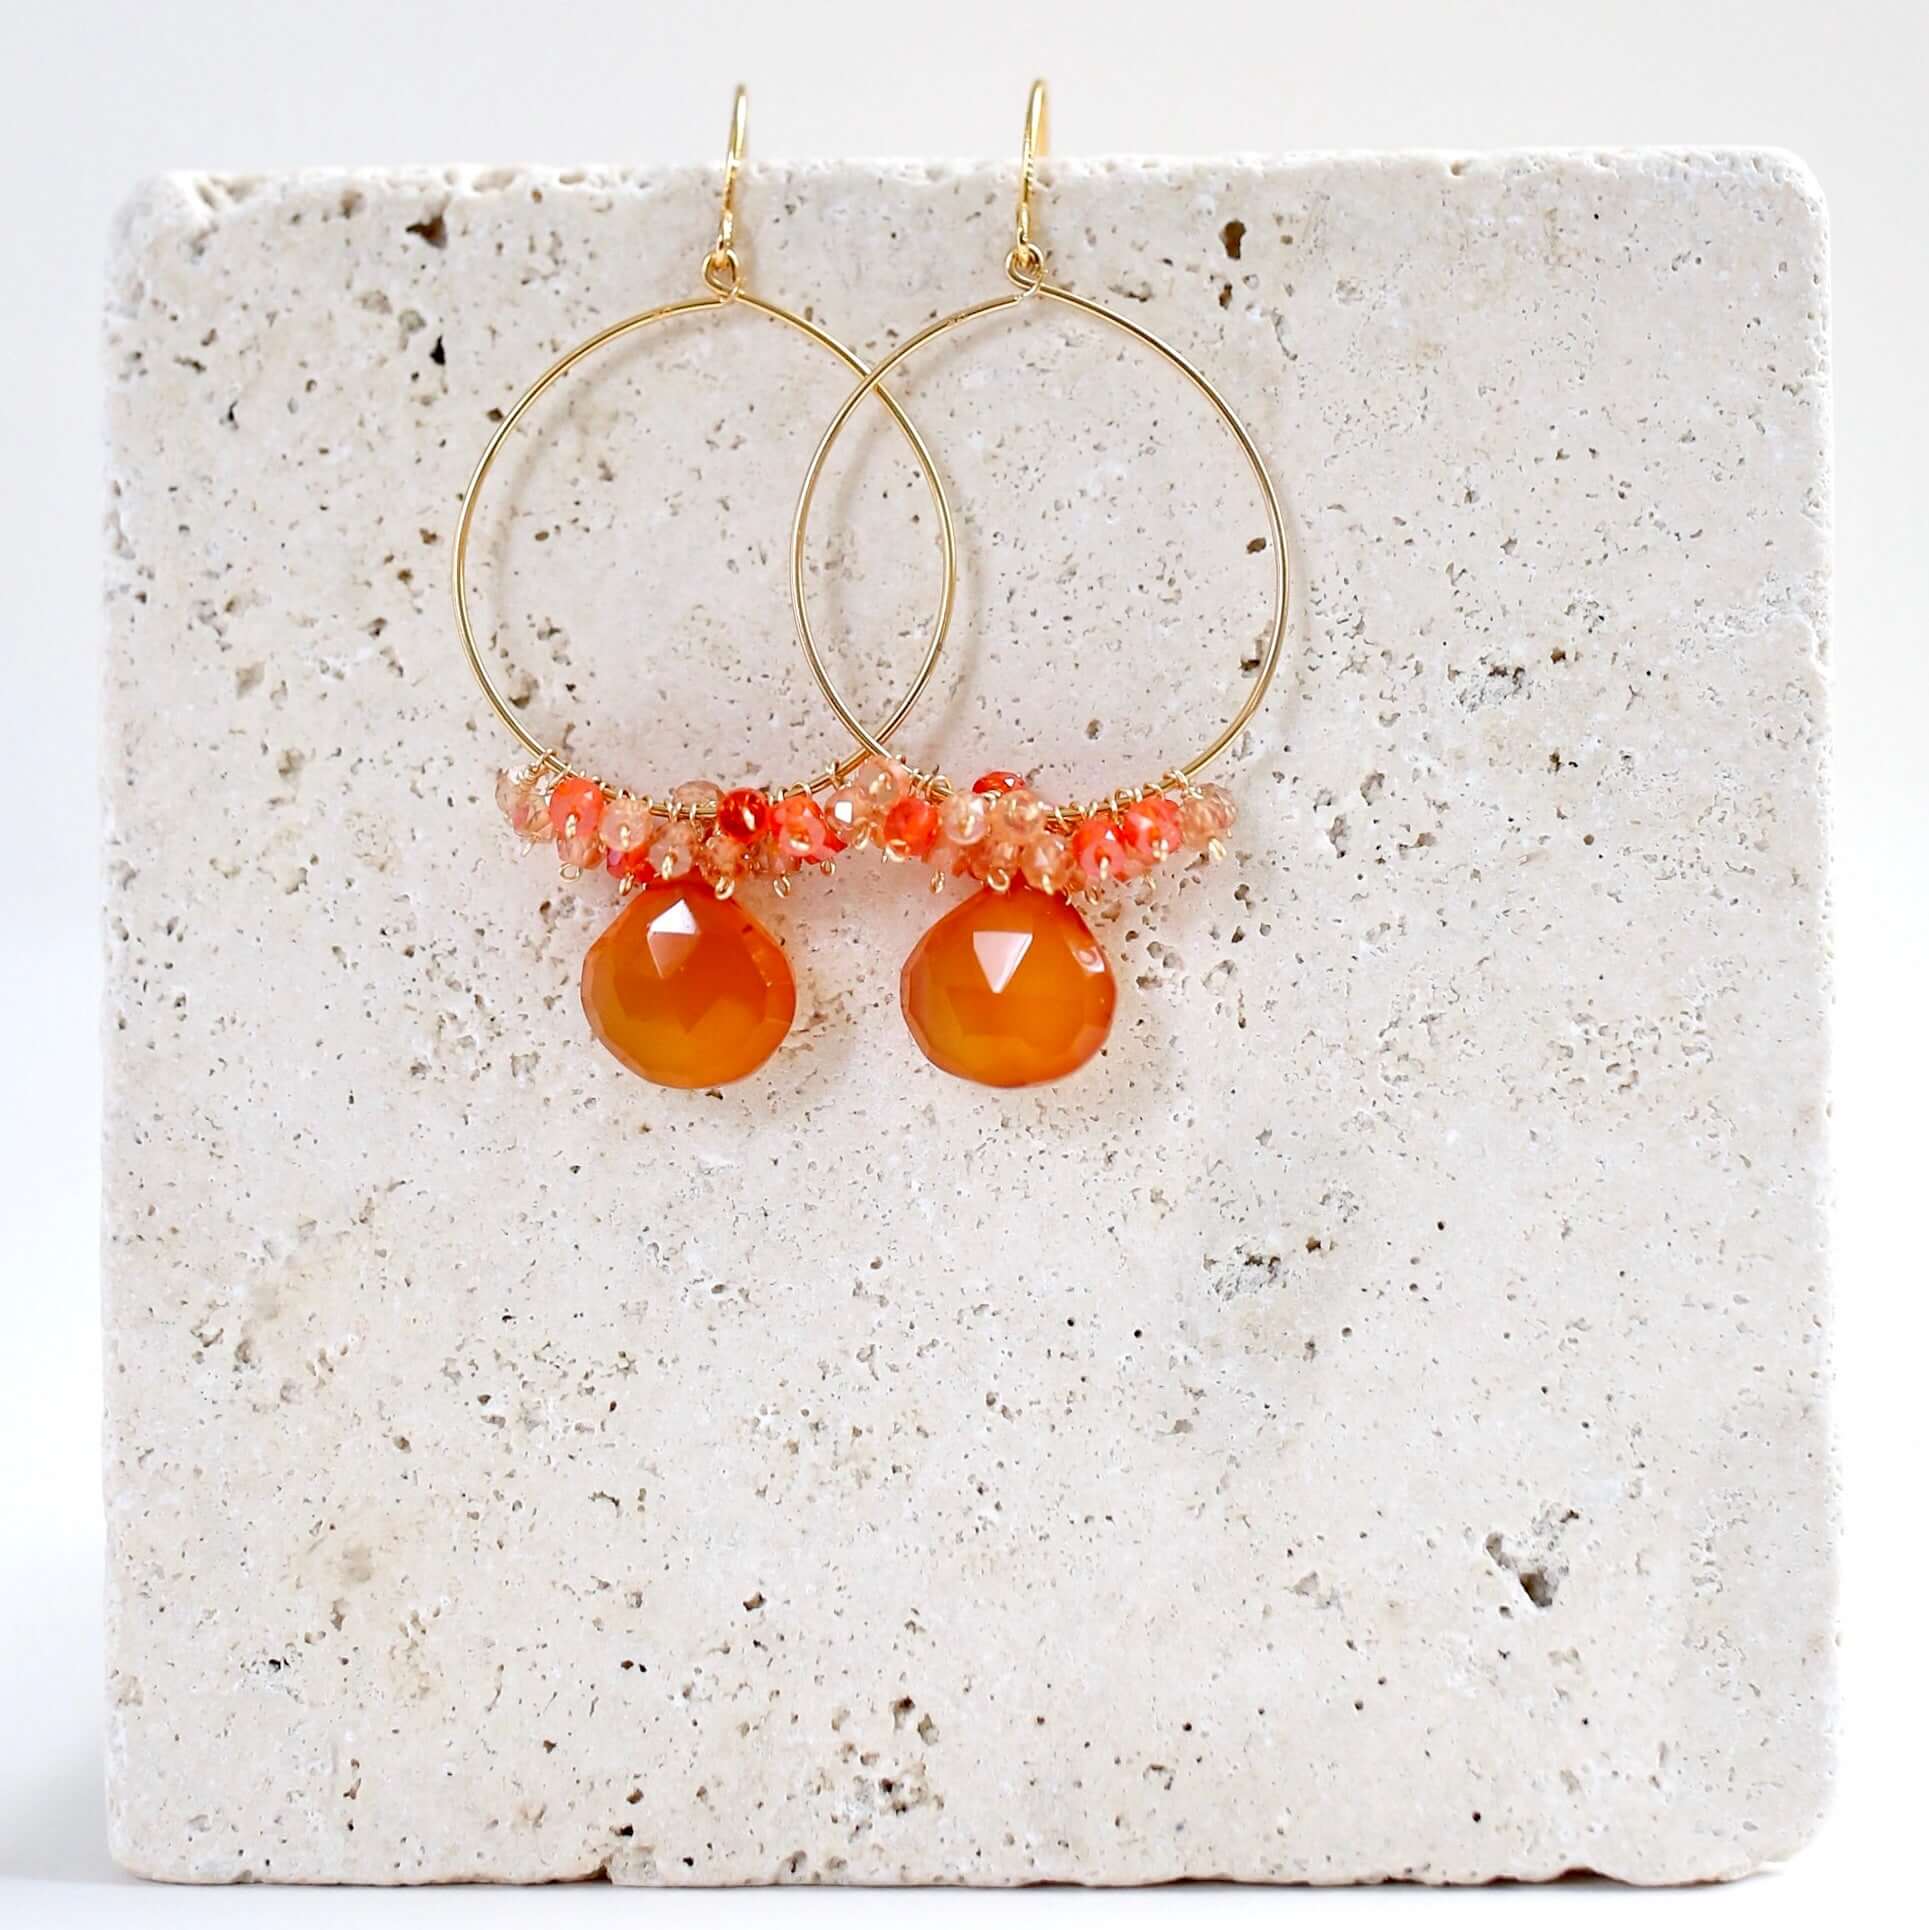 Swing Earrings with Dark Orange Chalcedony Gemstones in 14k Gold Plated Silver